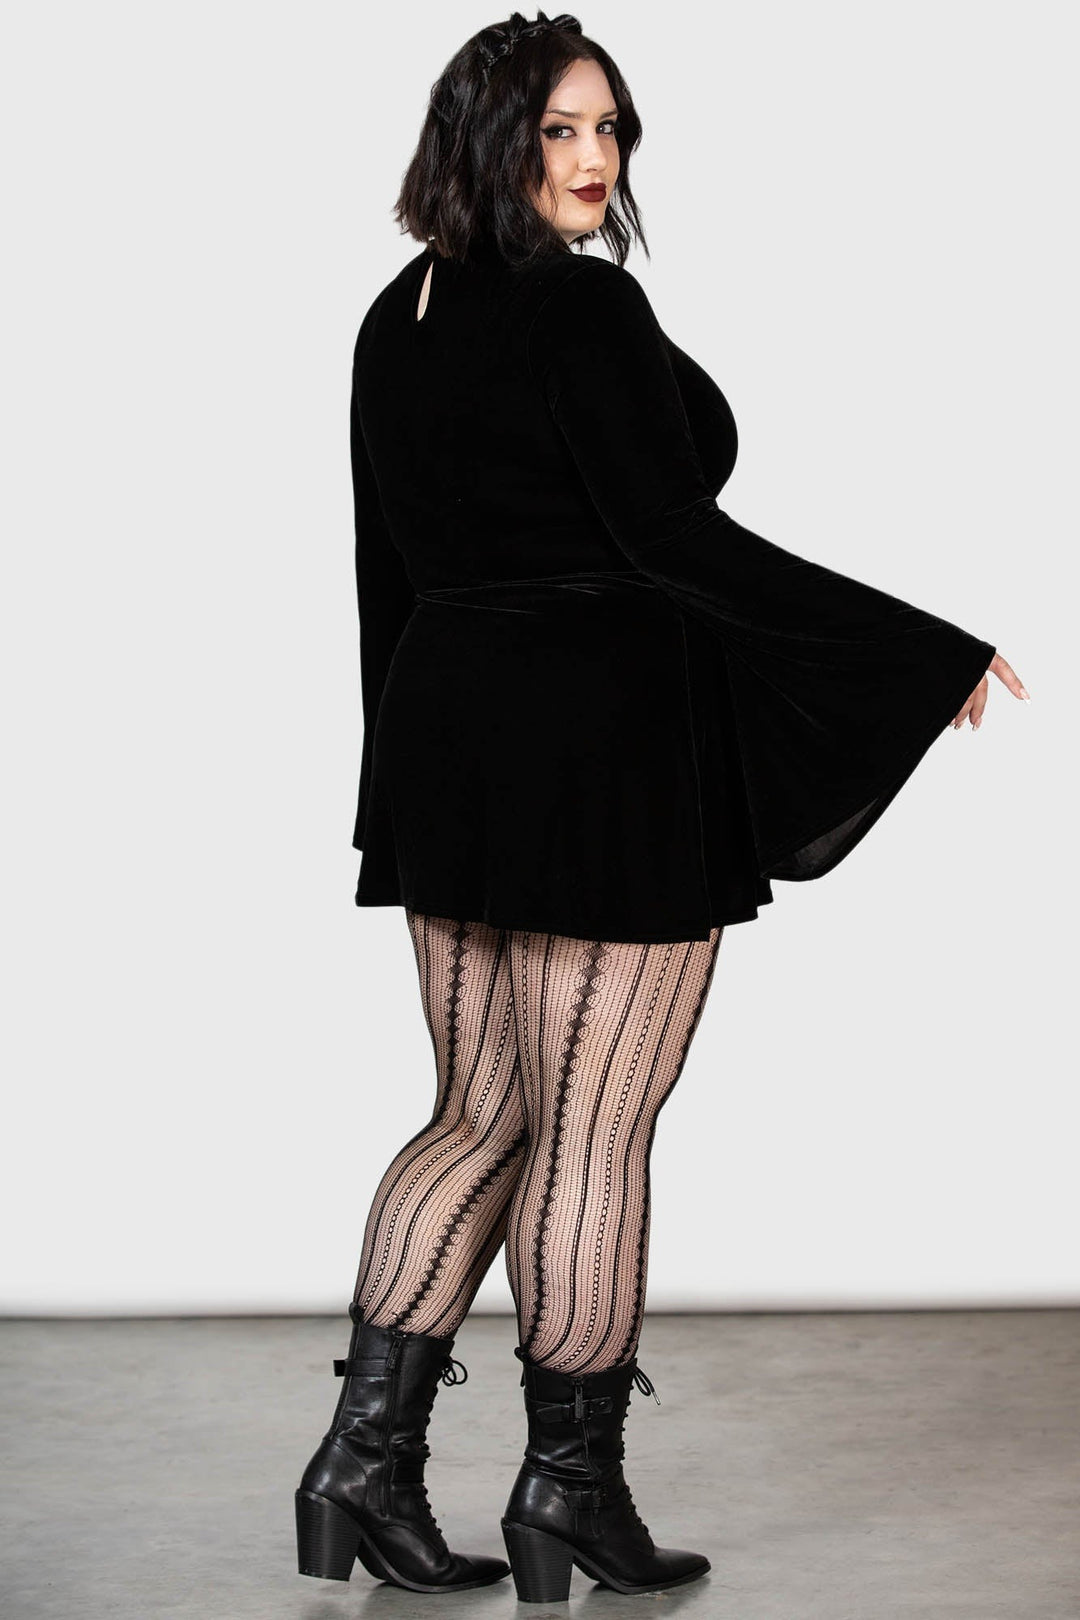 inverted moon black dress